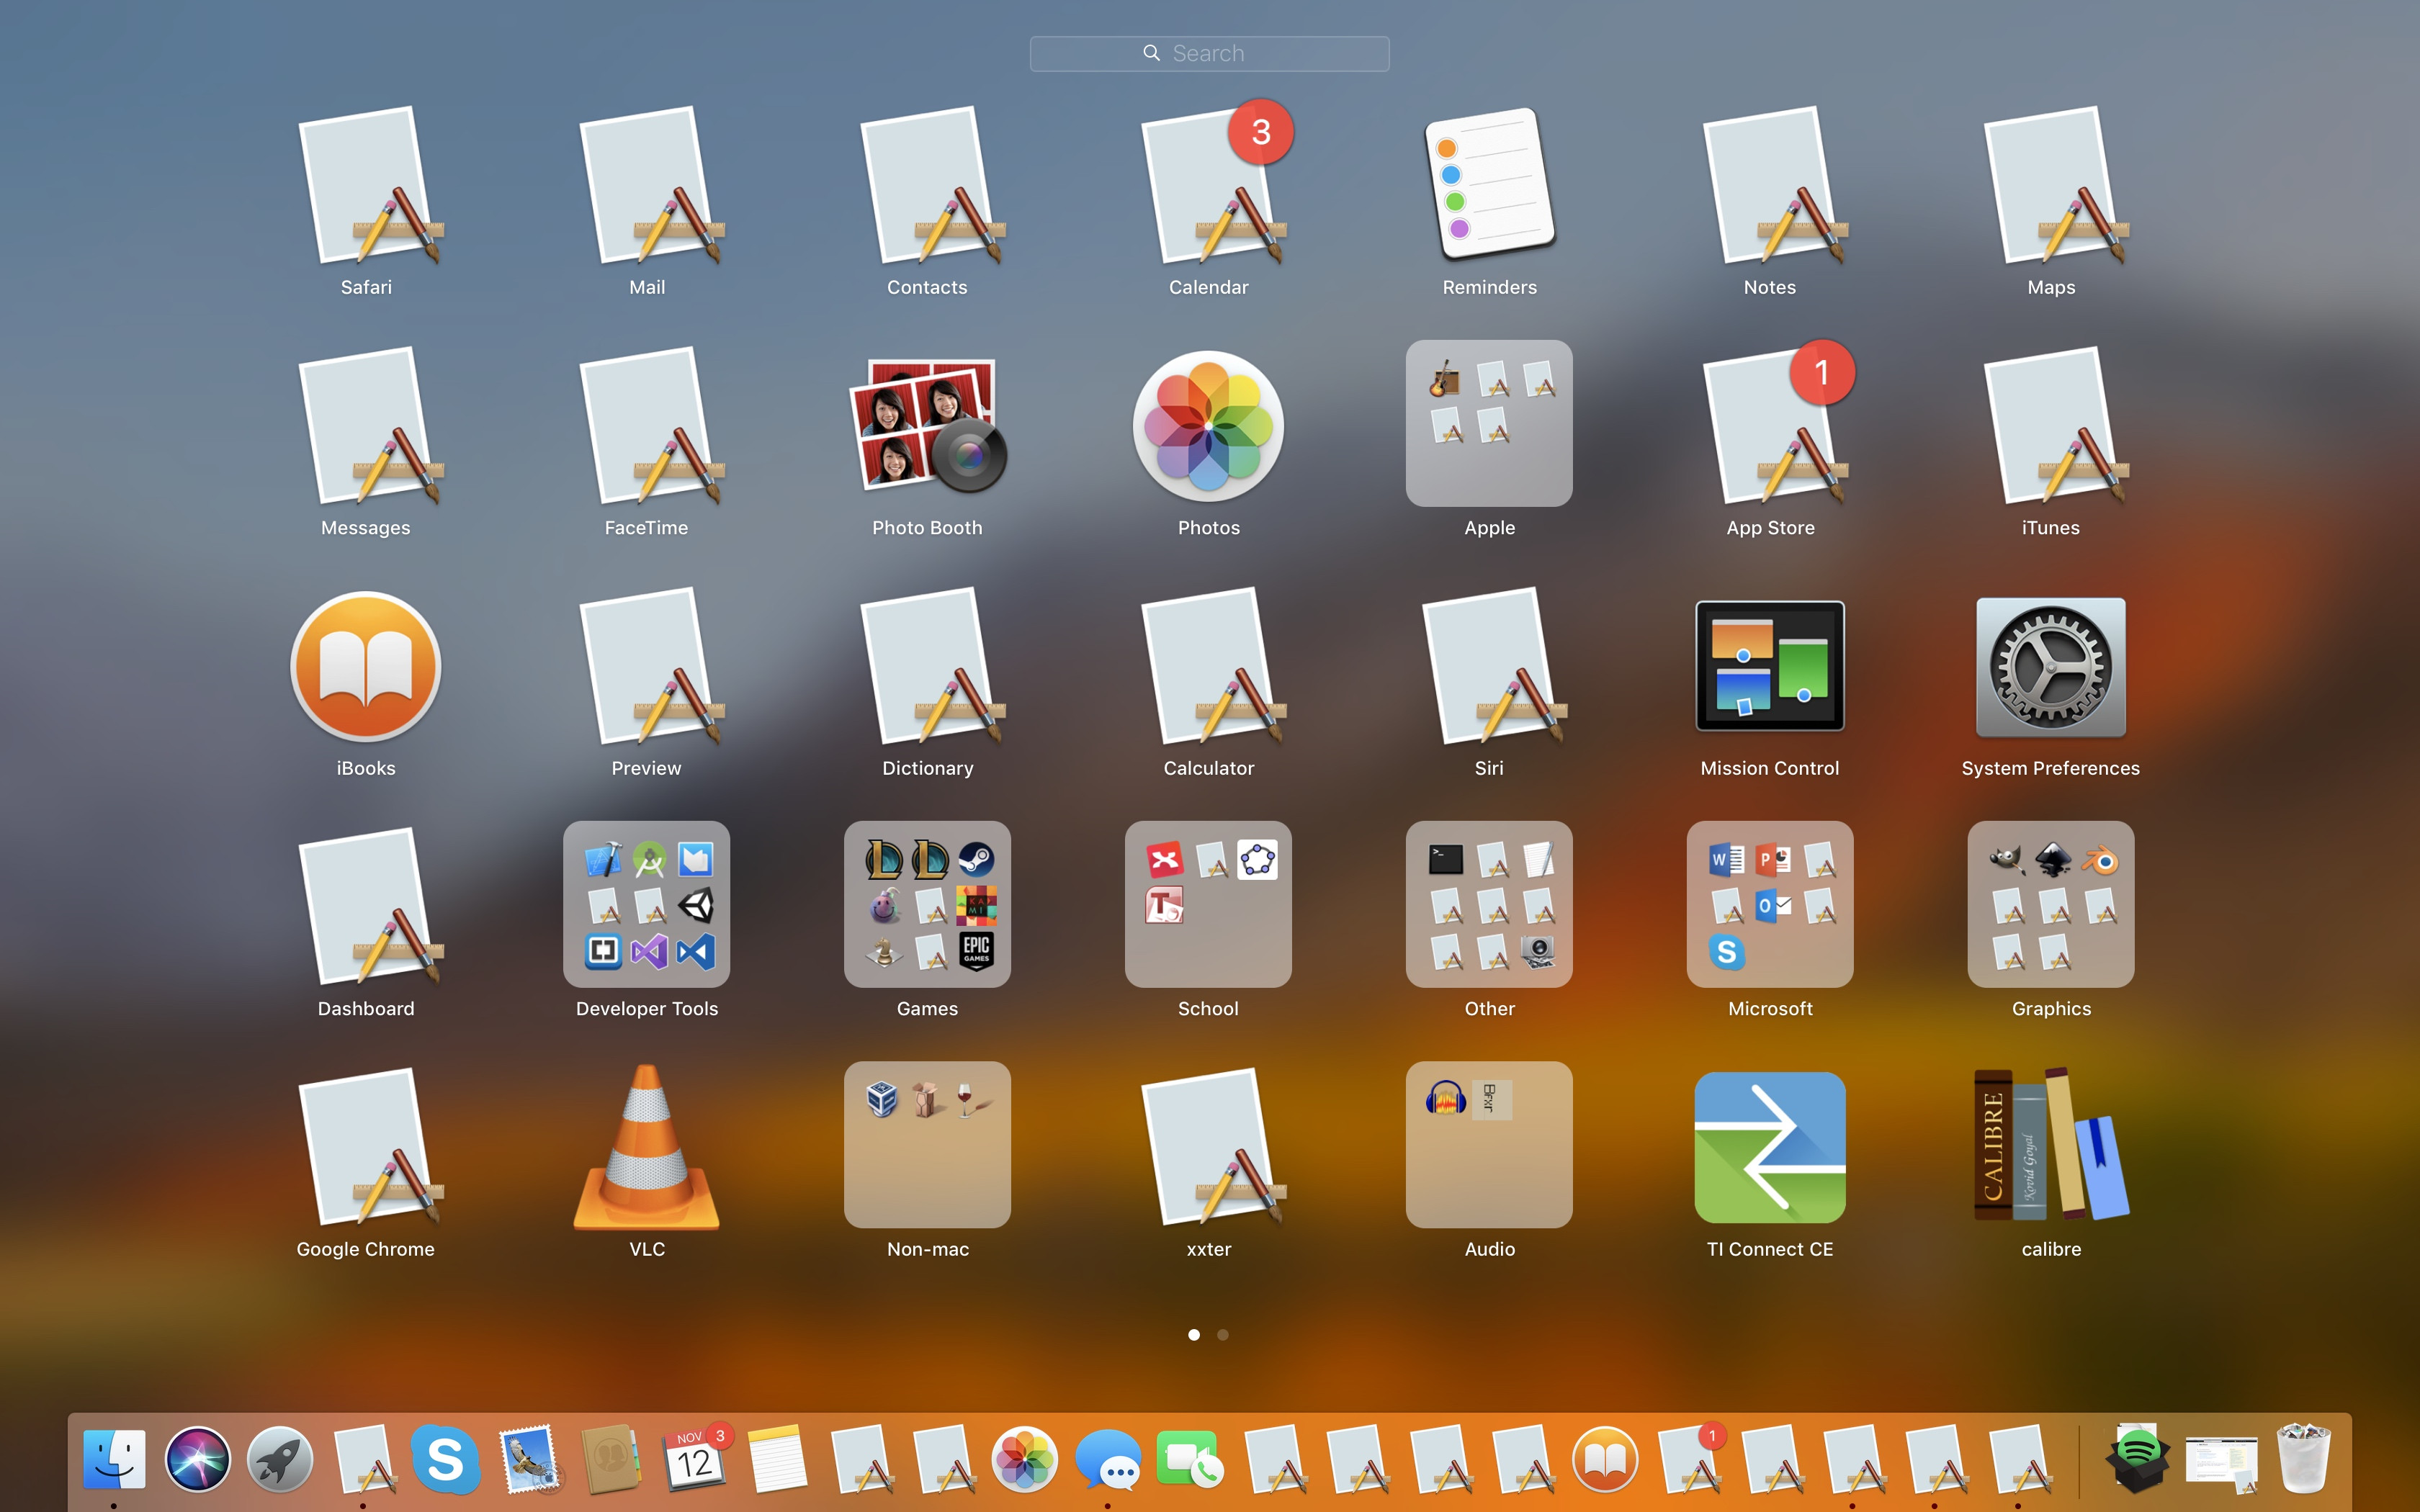 Download Folder Mac Dock Disappeared